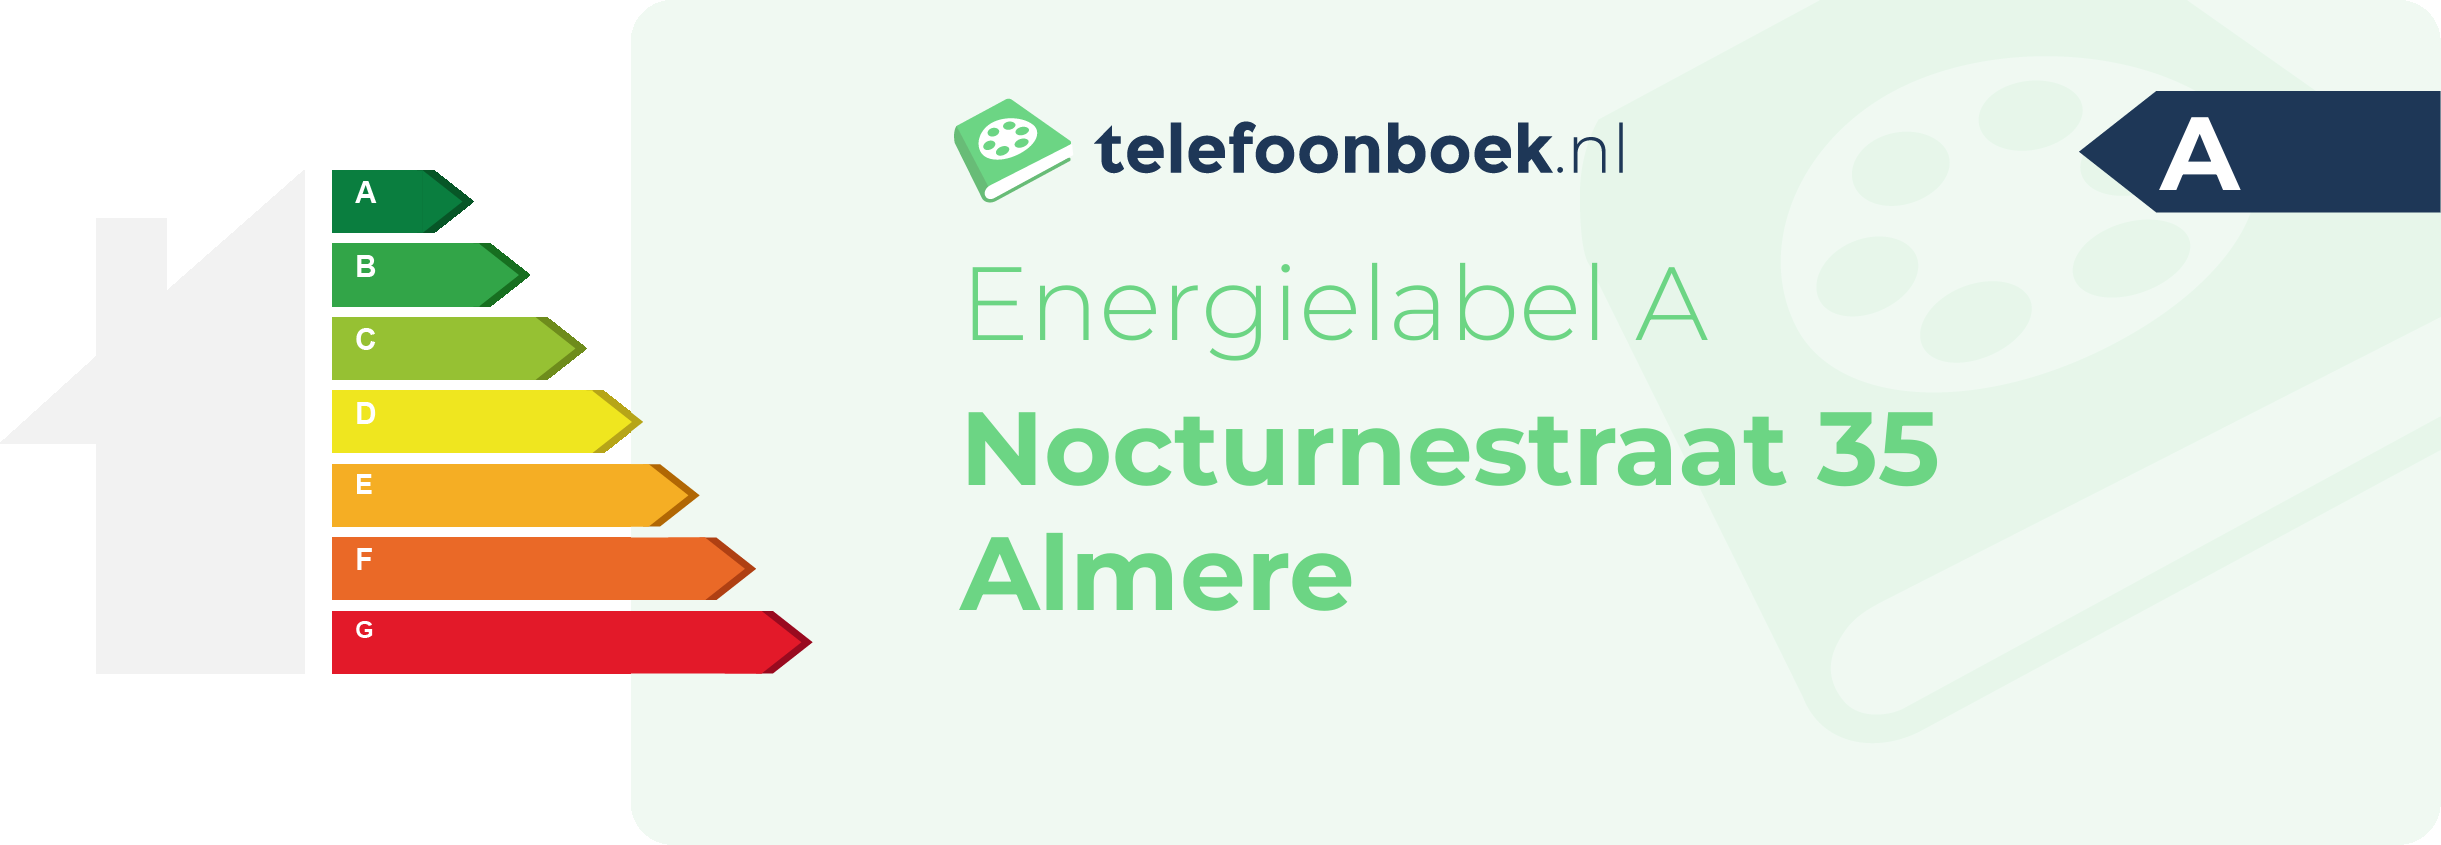 Energielabel Nocturnestraat 35 Almere